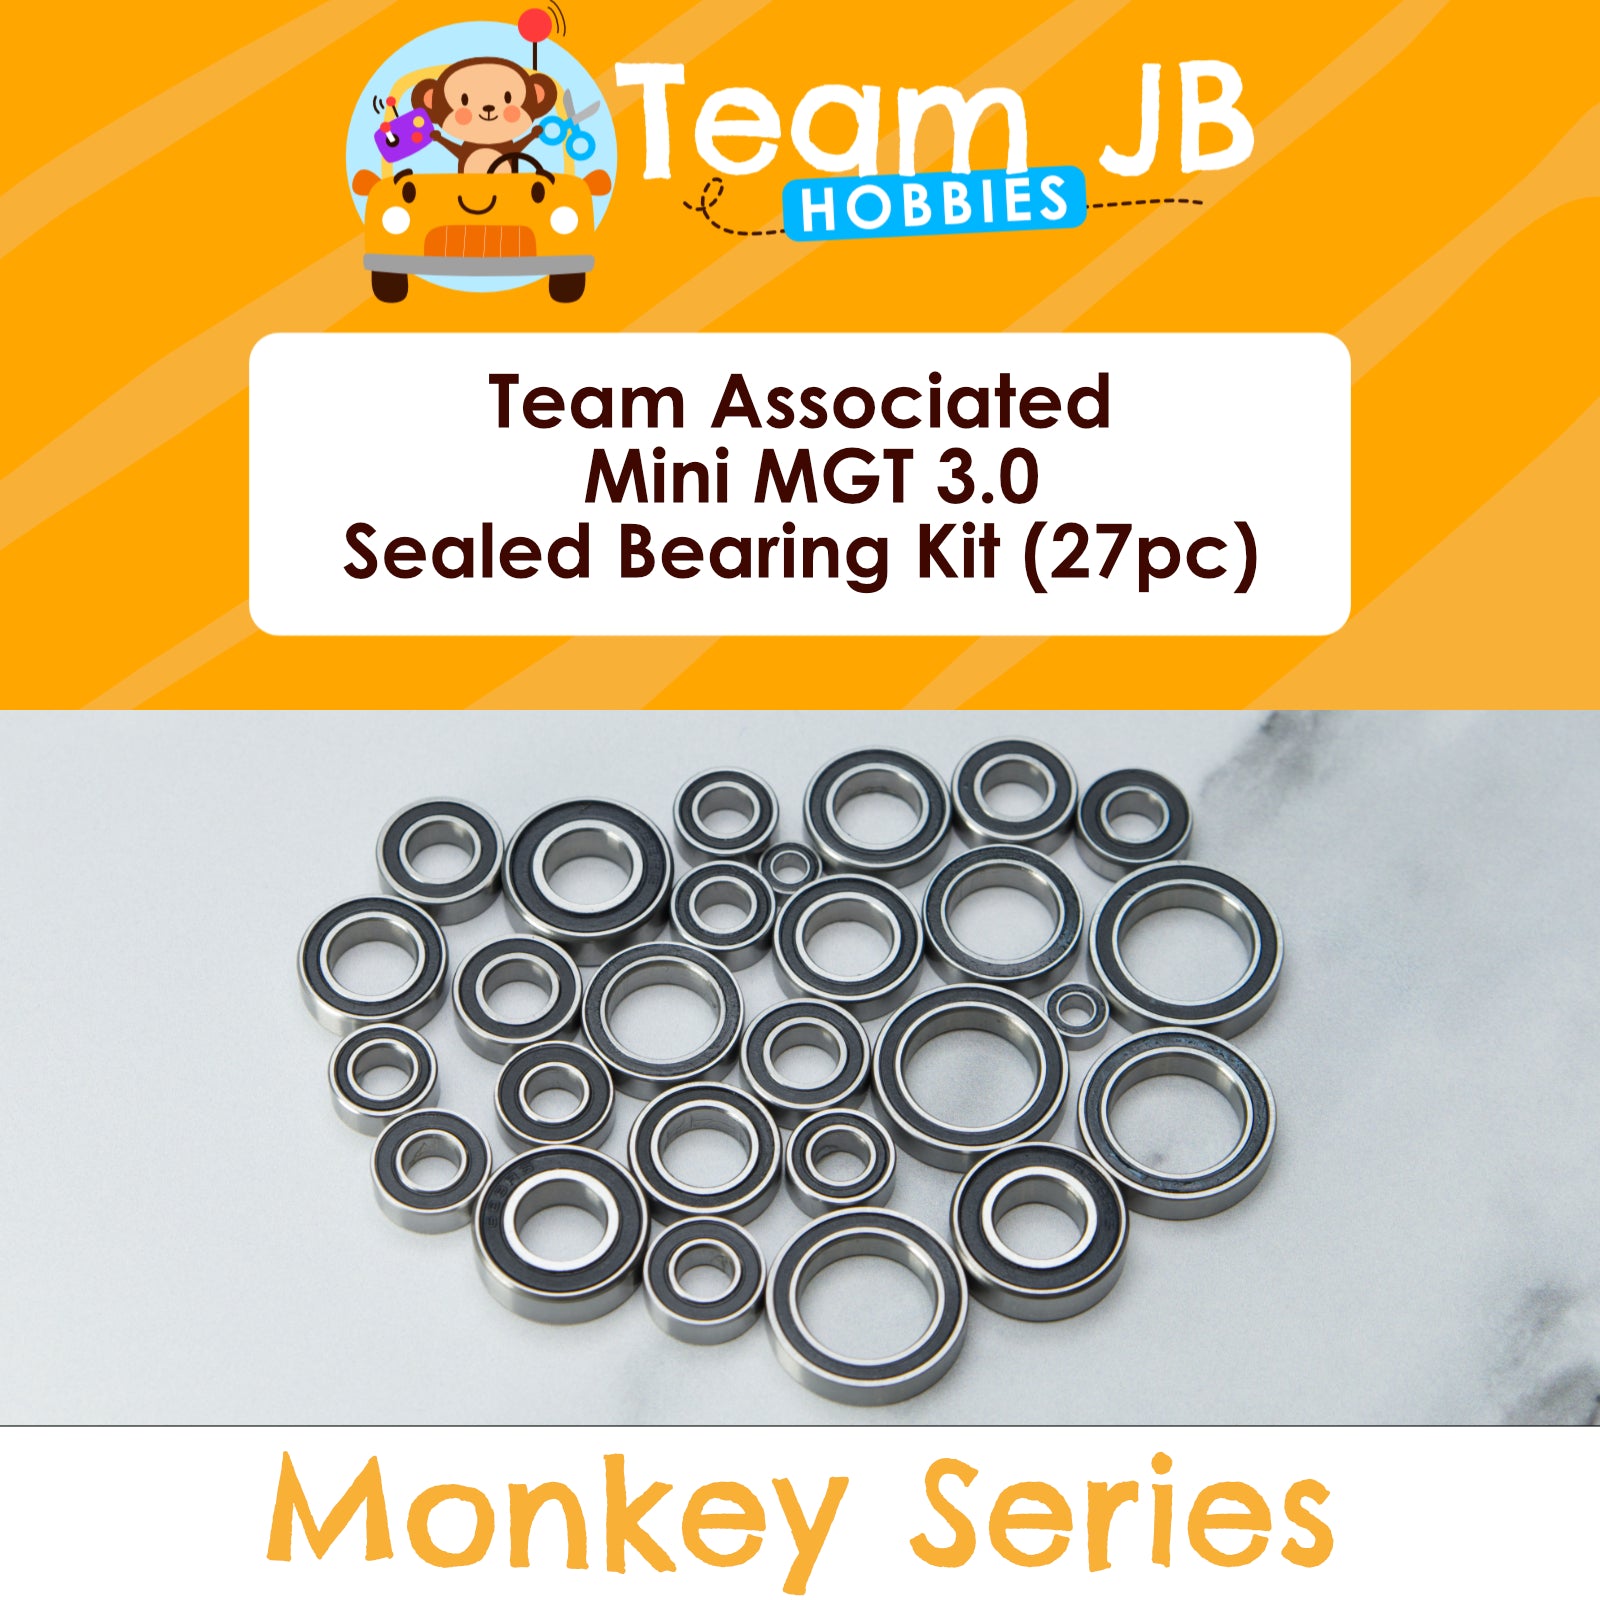 Team Associated Mini MGT 3.0 - Sealed Bearing Kit